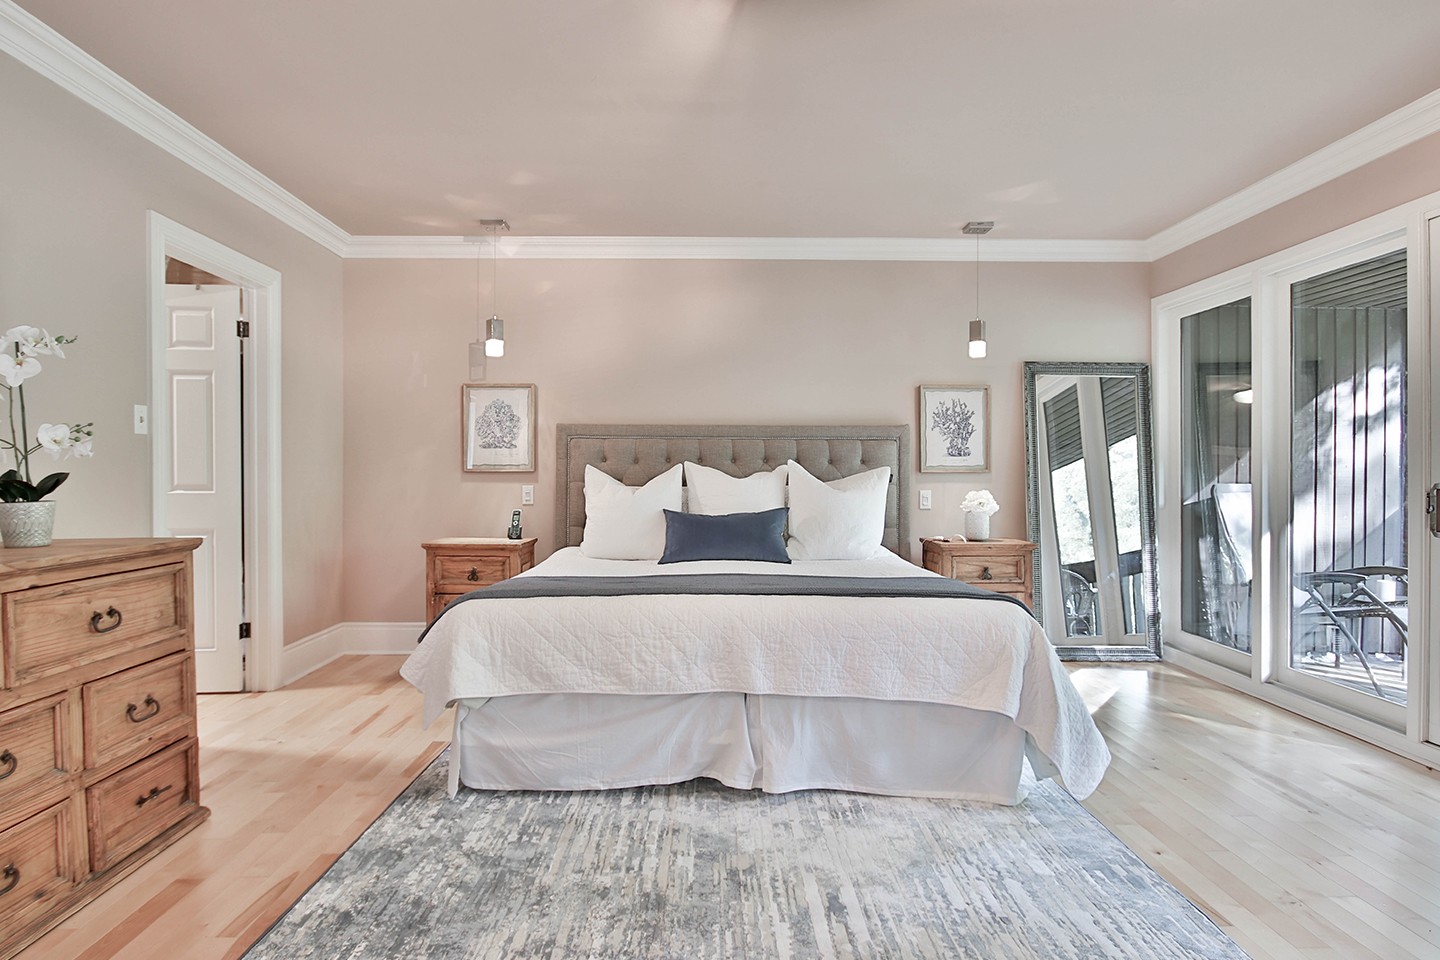 10 Romantic Bedroom Decor Ideas for Couples - IR1 1